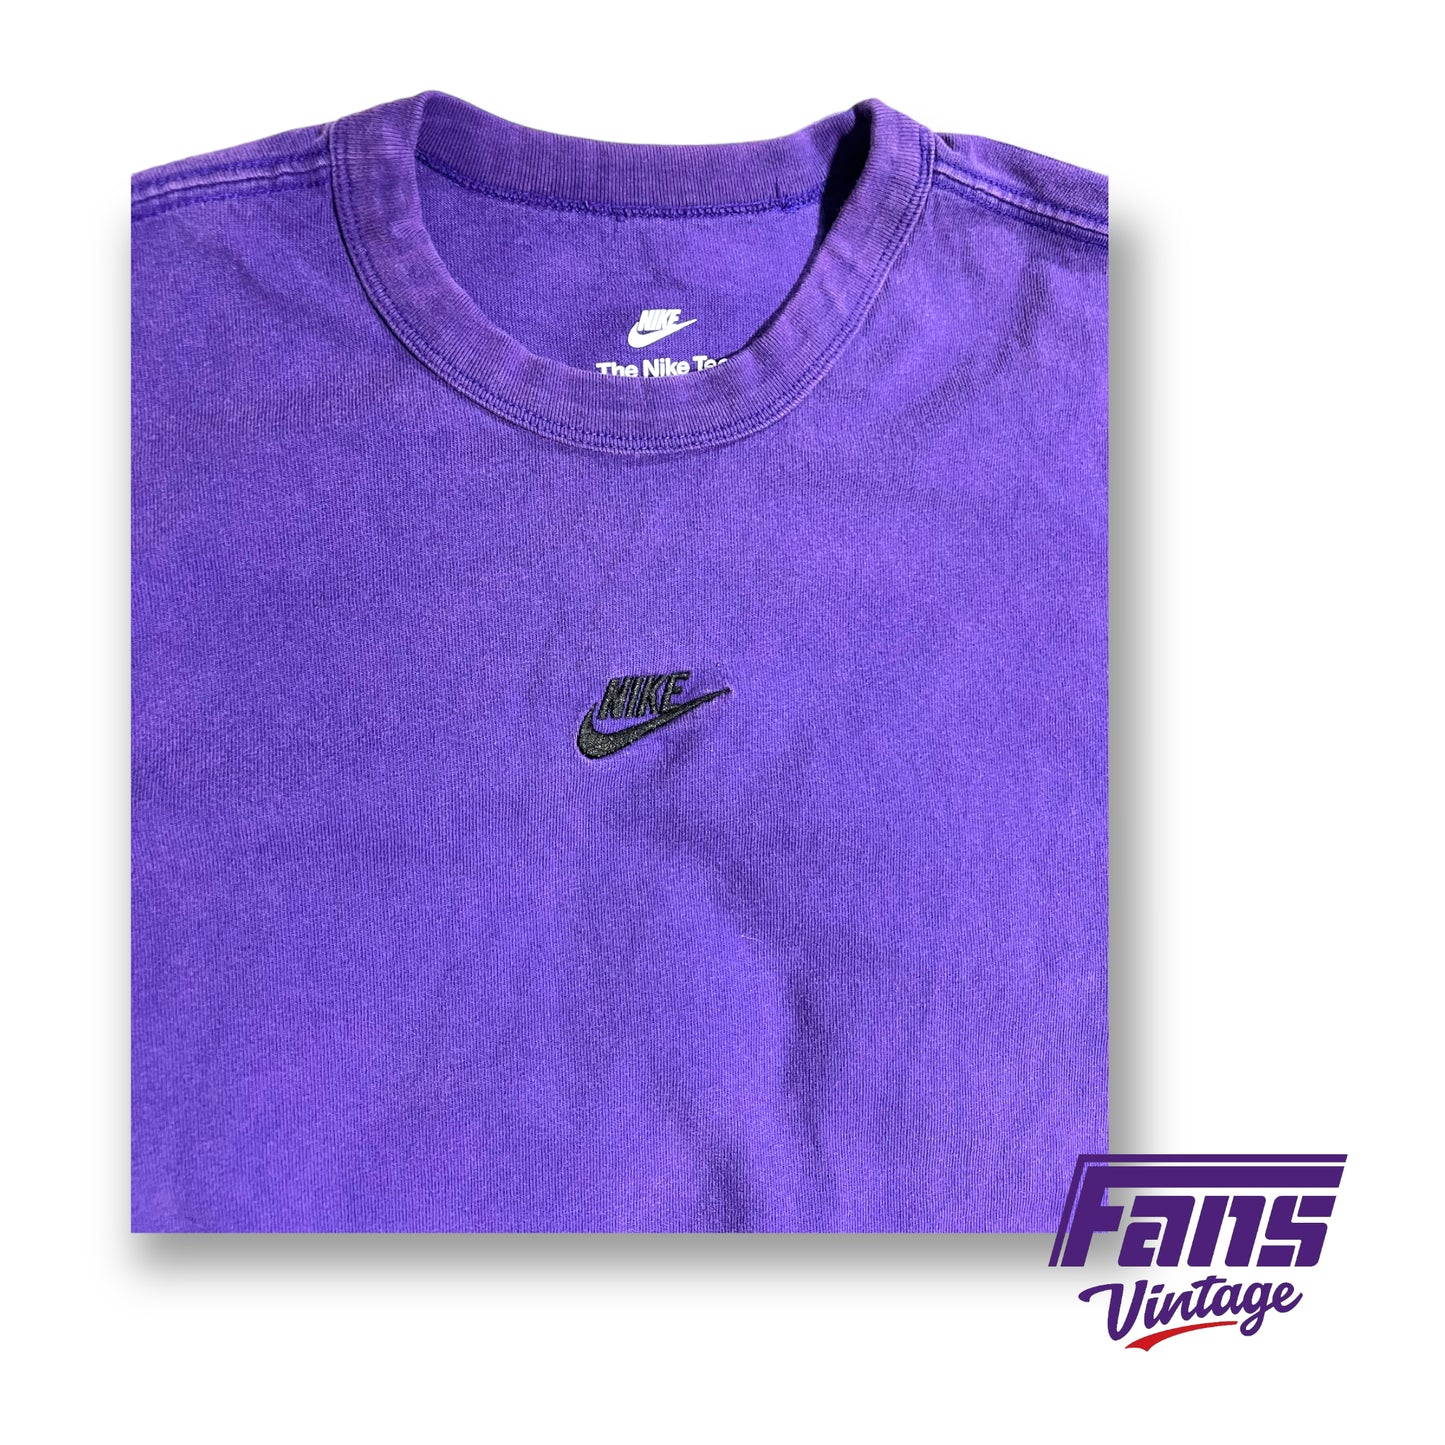 *RARE TEAM CUSTOM* TCU Basketball Player issued Limited Edition Nike Sportswear crewneck long-sleeve Shirt - Horned Frog logo on back